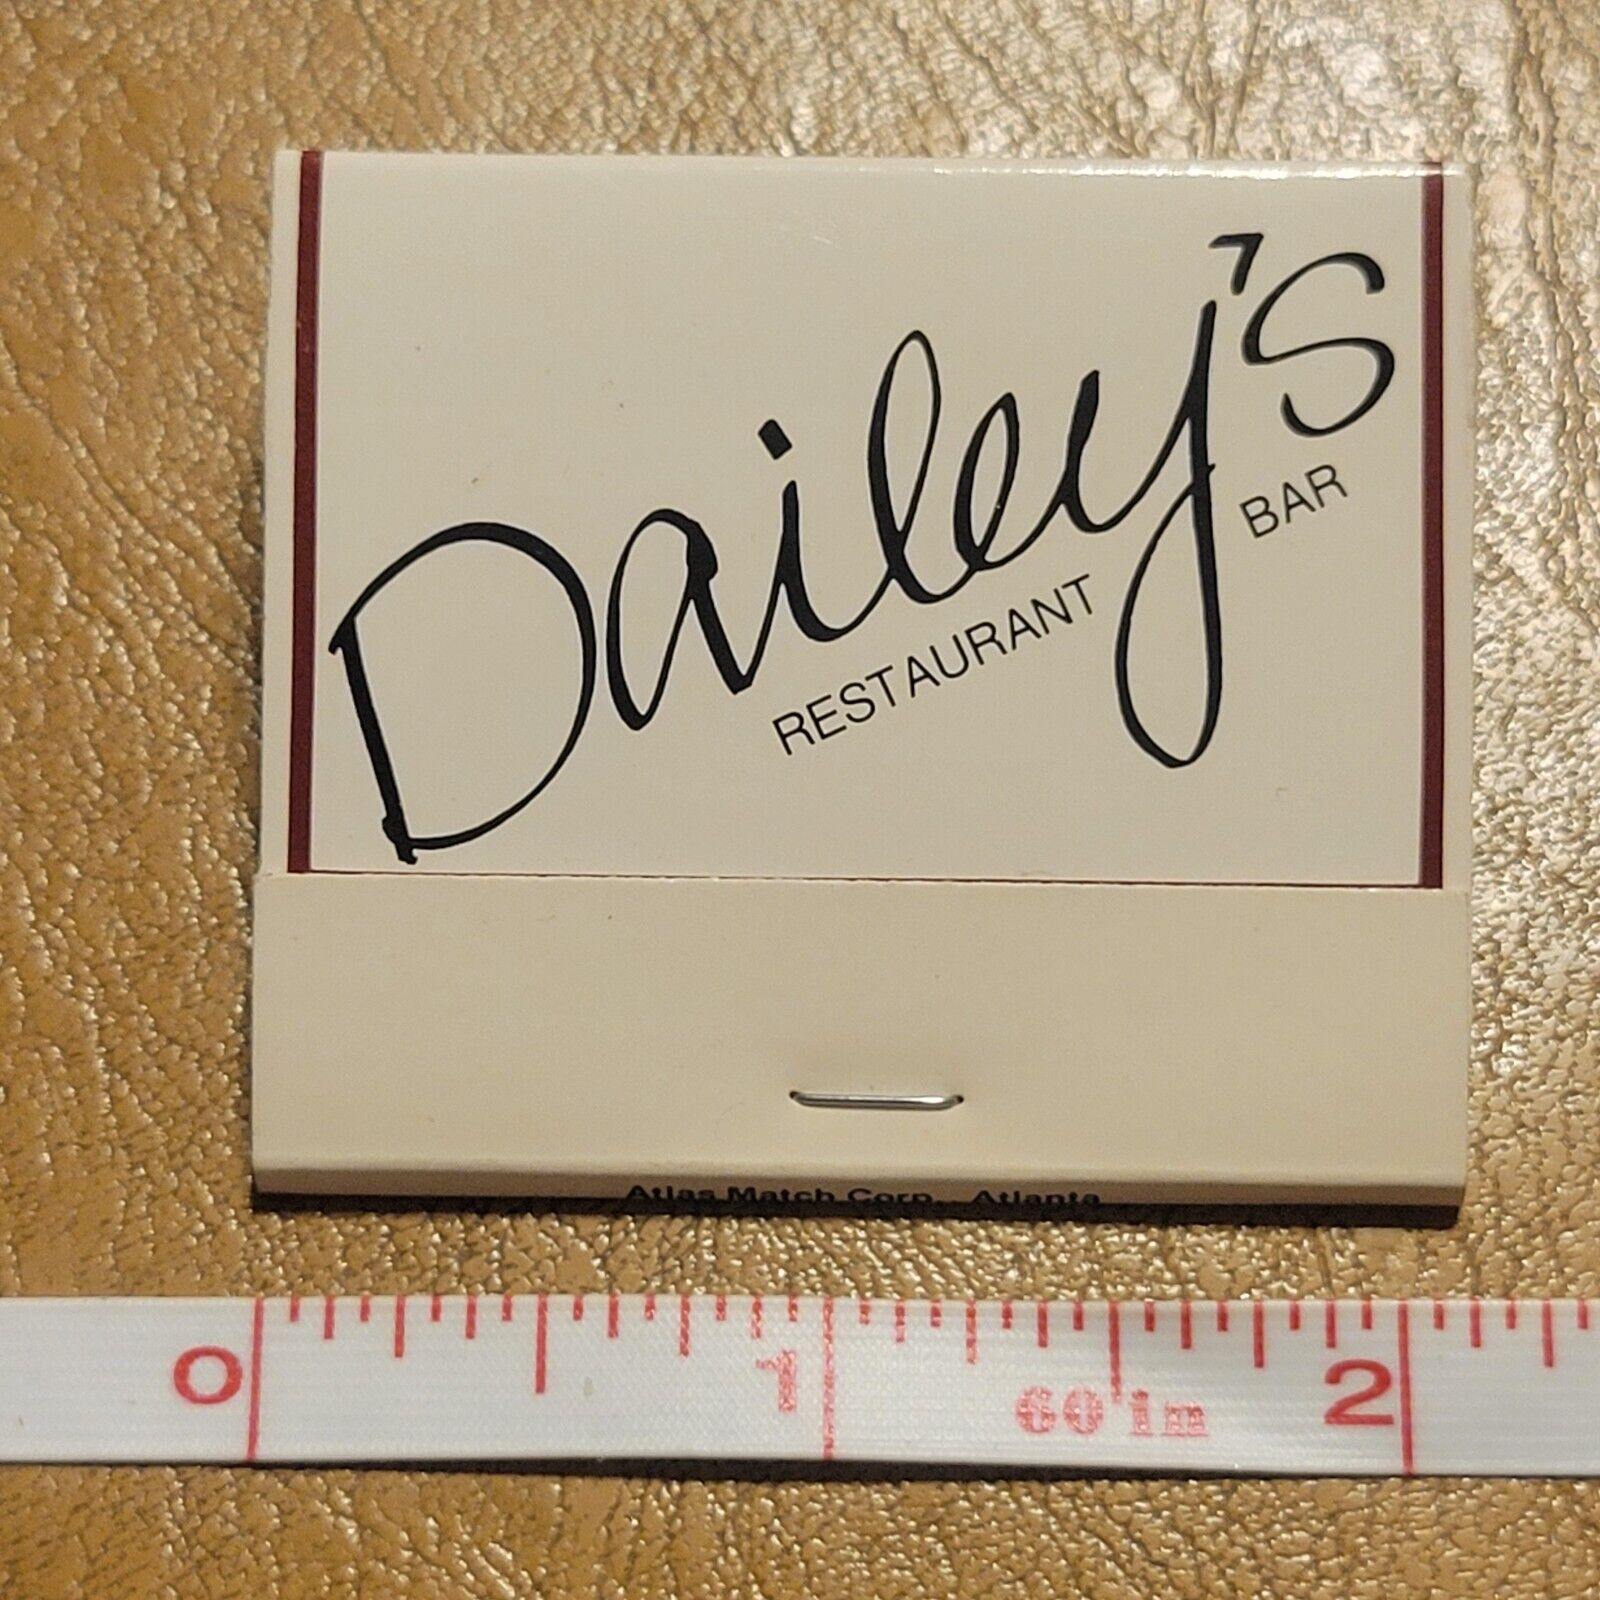 Dailey's Restaurant Bar Downtown Atlanta Georgia Full Unstruck Vintage Matchbook